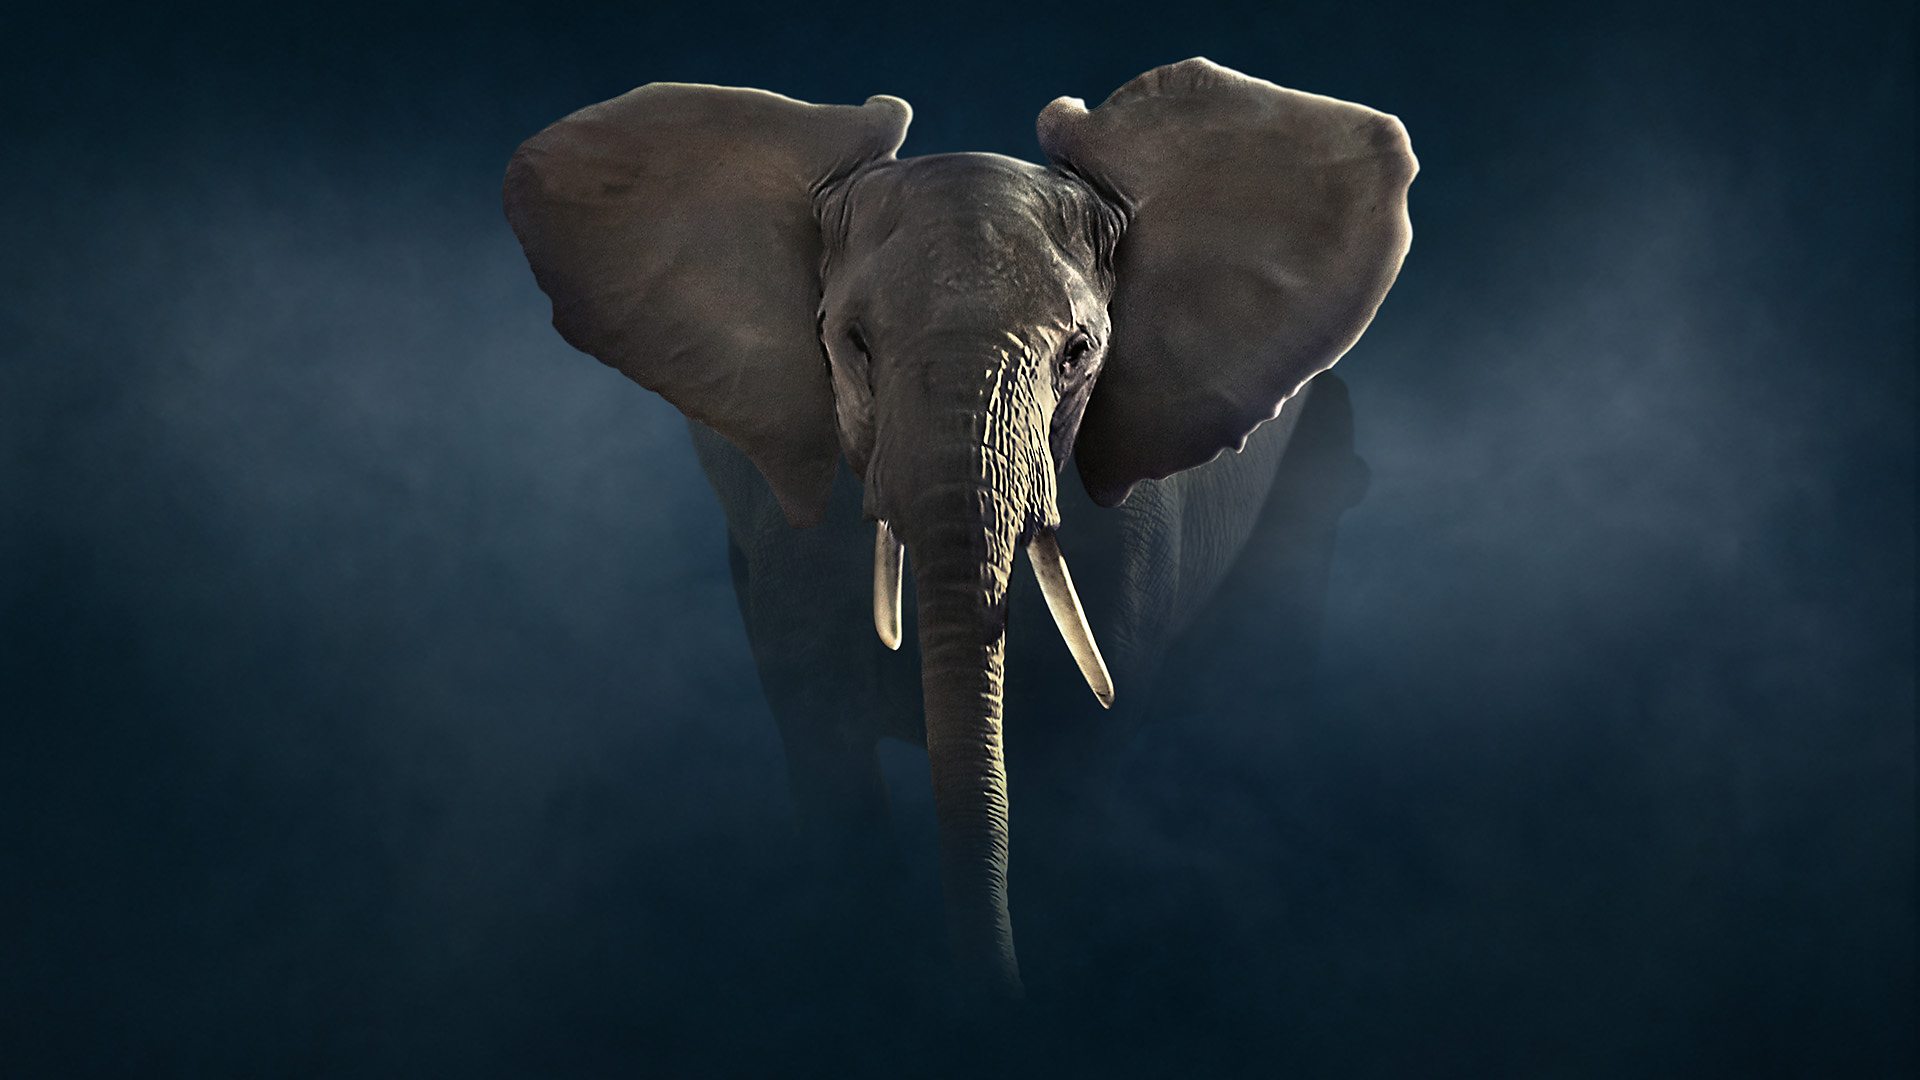 BBC One - Dynasties - Elephant ID guide